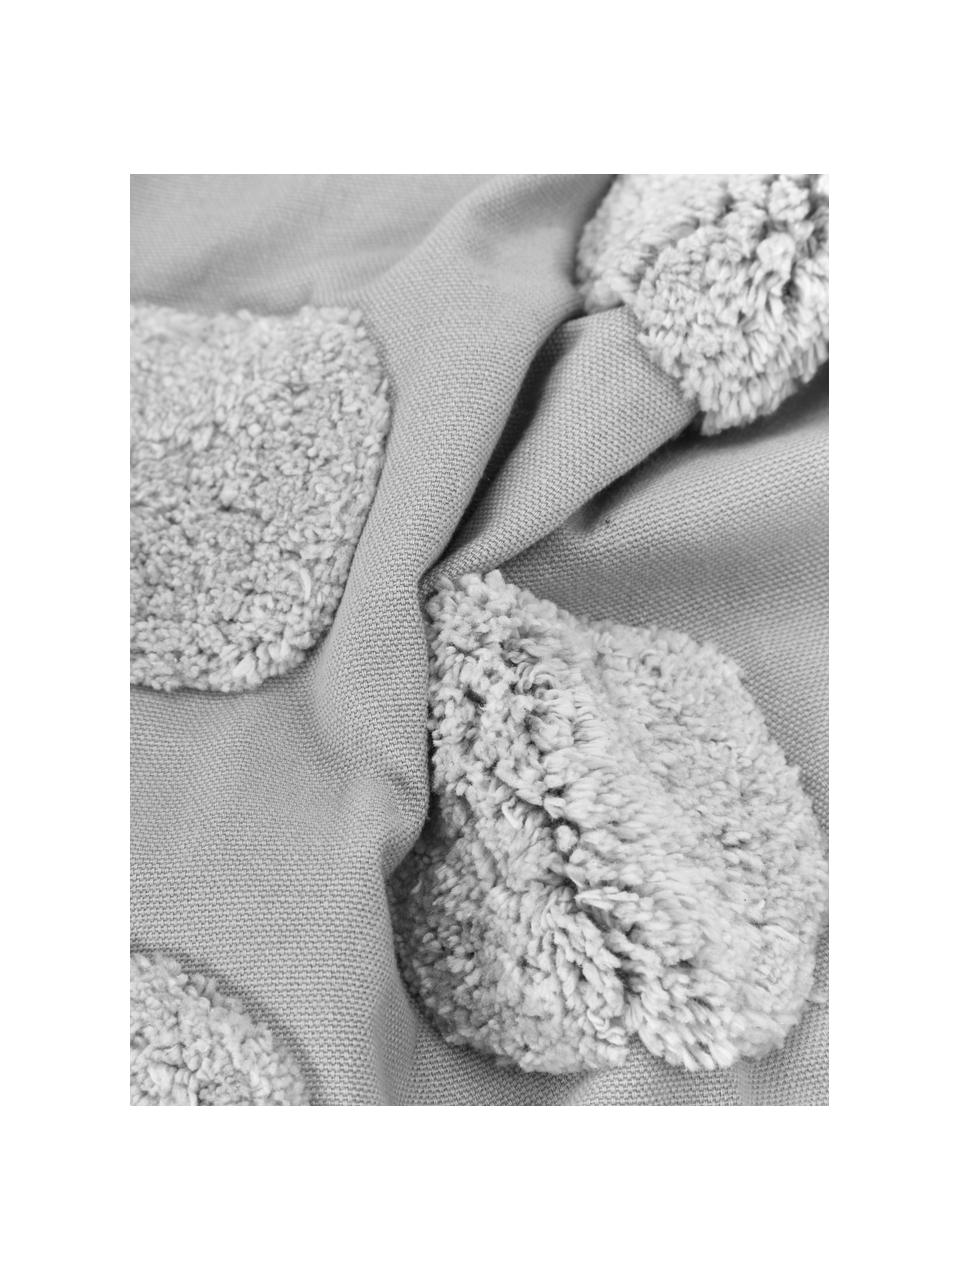 Kissenhülle Rowen mit getuftetem Muster, 100% Baumwolle, Grau, 50 x 50 cm